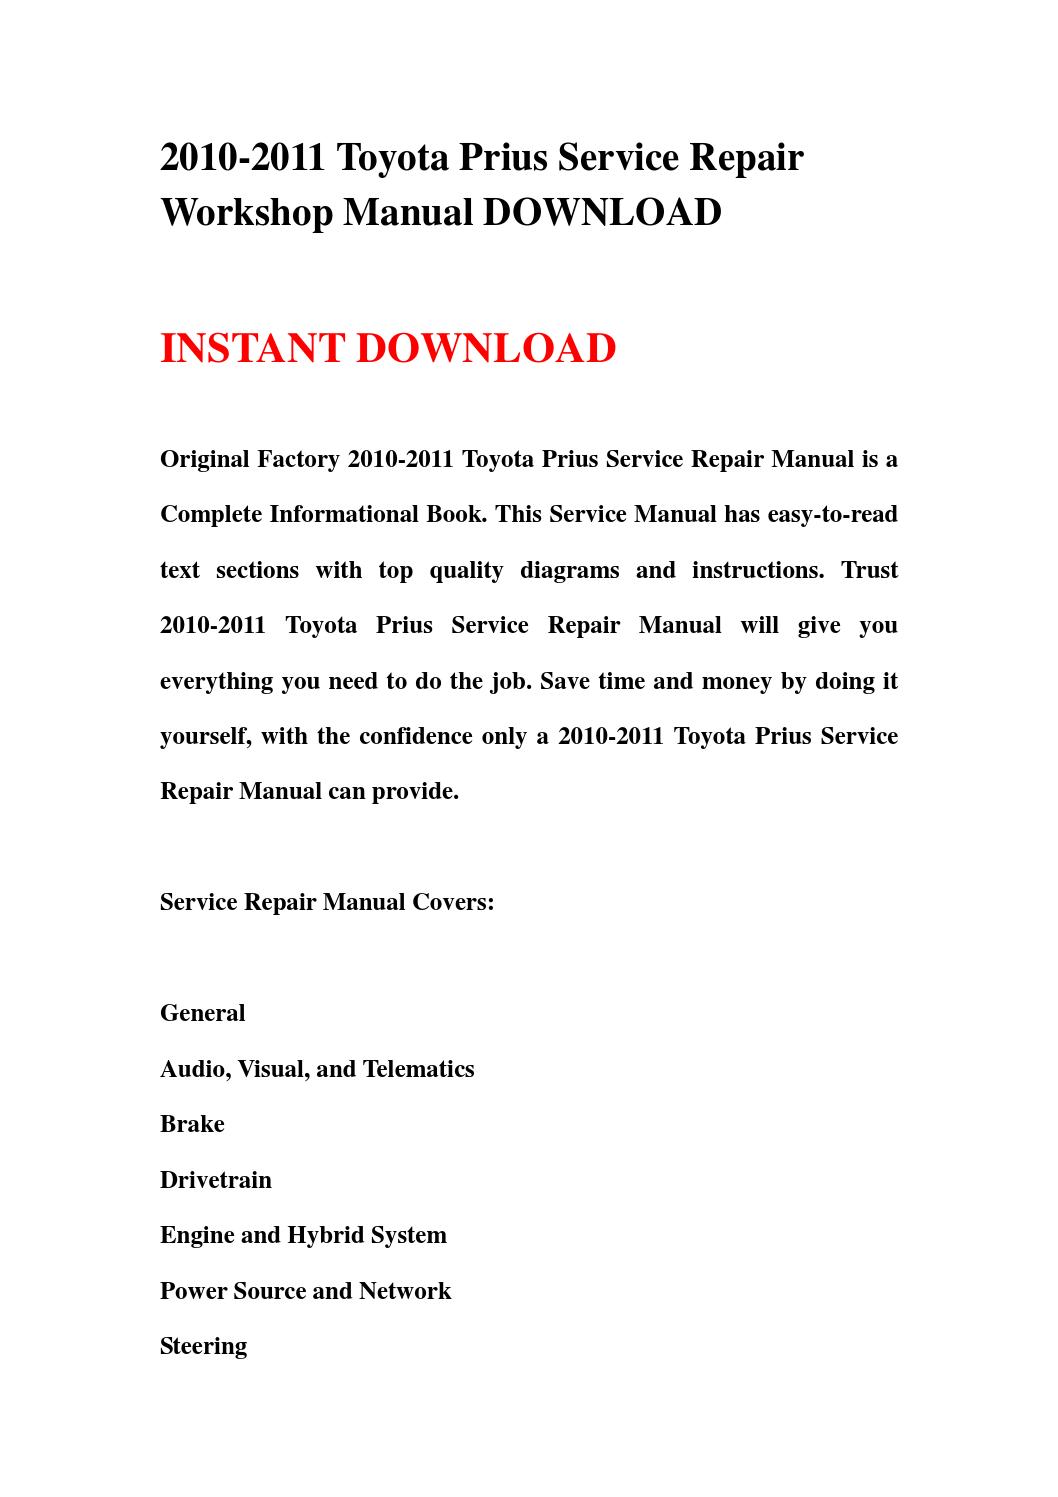 Toyota Prius Manual Download